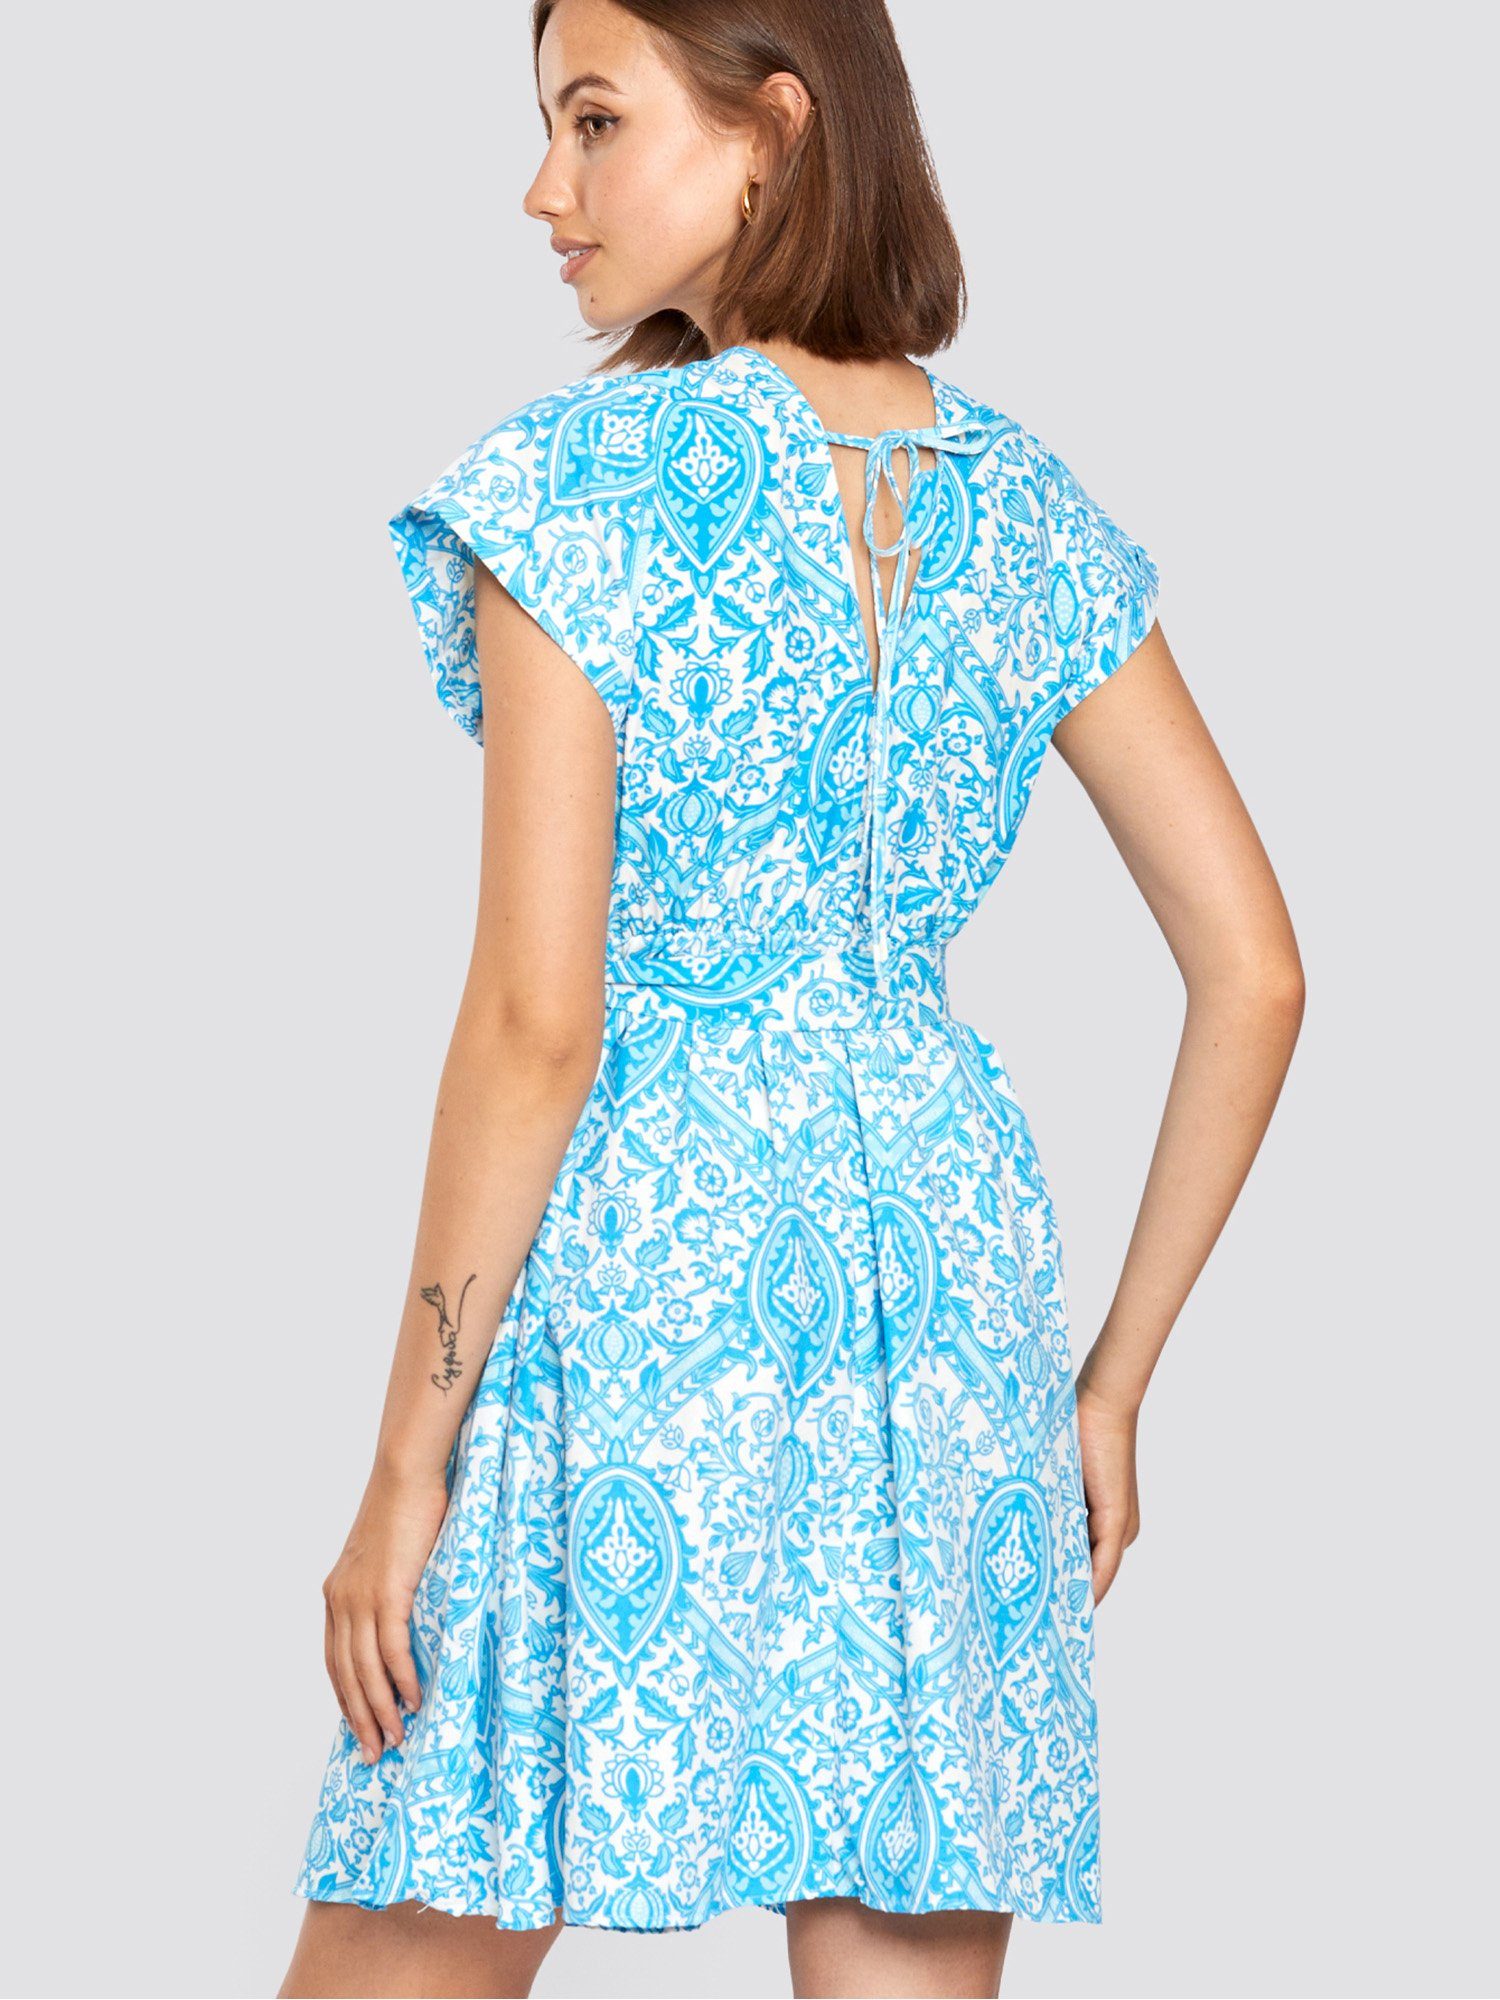 Freshlions Minikleid Gemustertes Kleid Sonstige, blau Taillentunnelzug